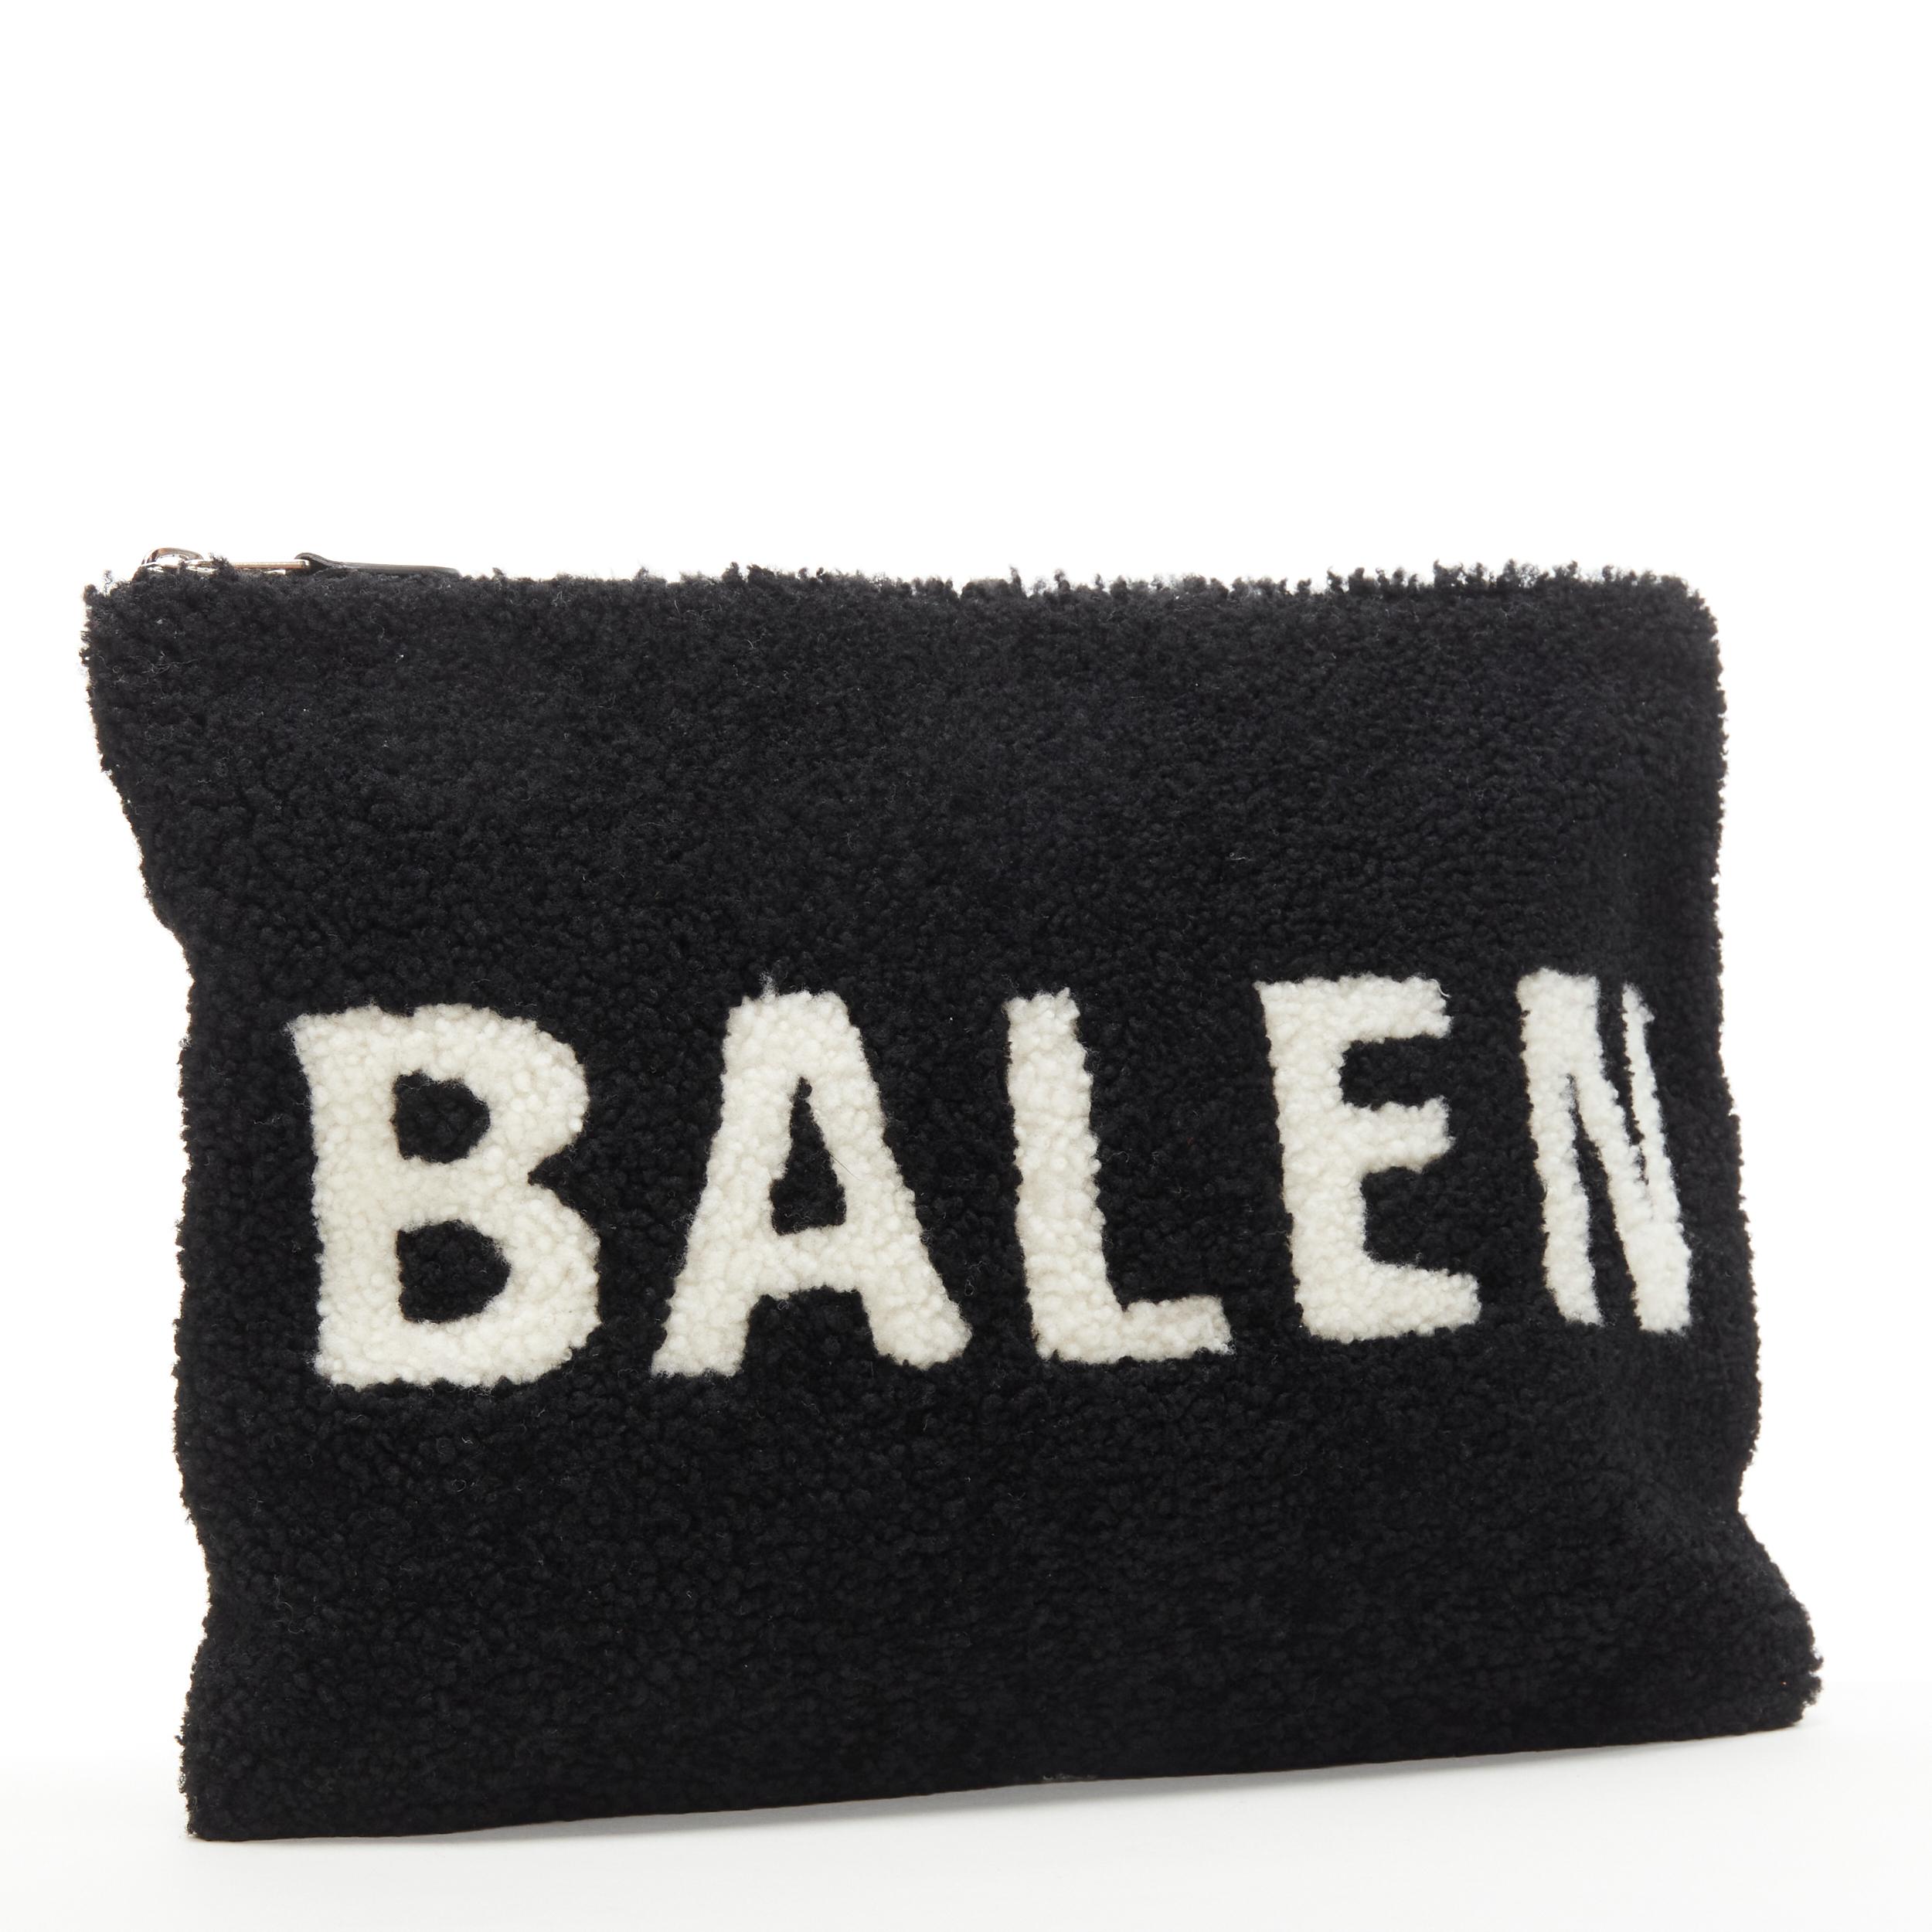 Black new BALENCIAGA Demna logo print black white merino lamb shearling zip clutch bag